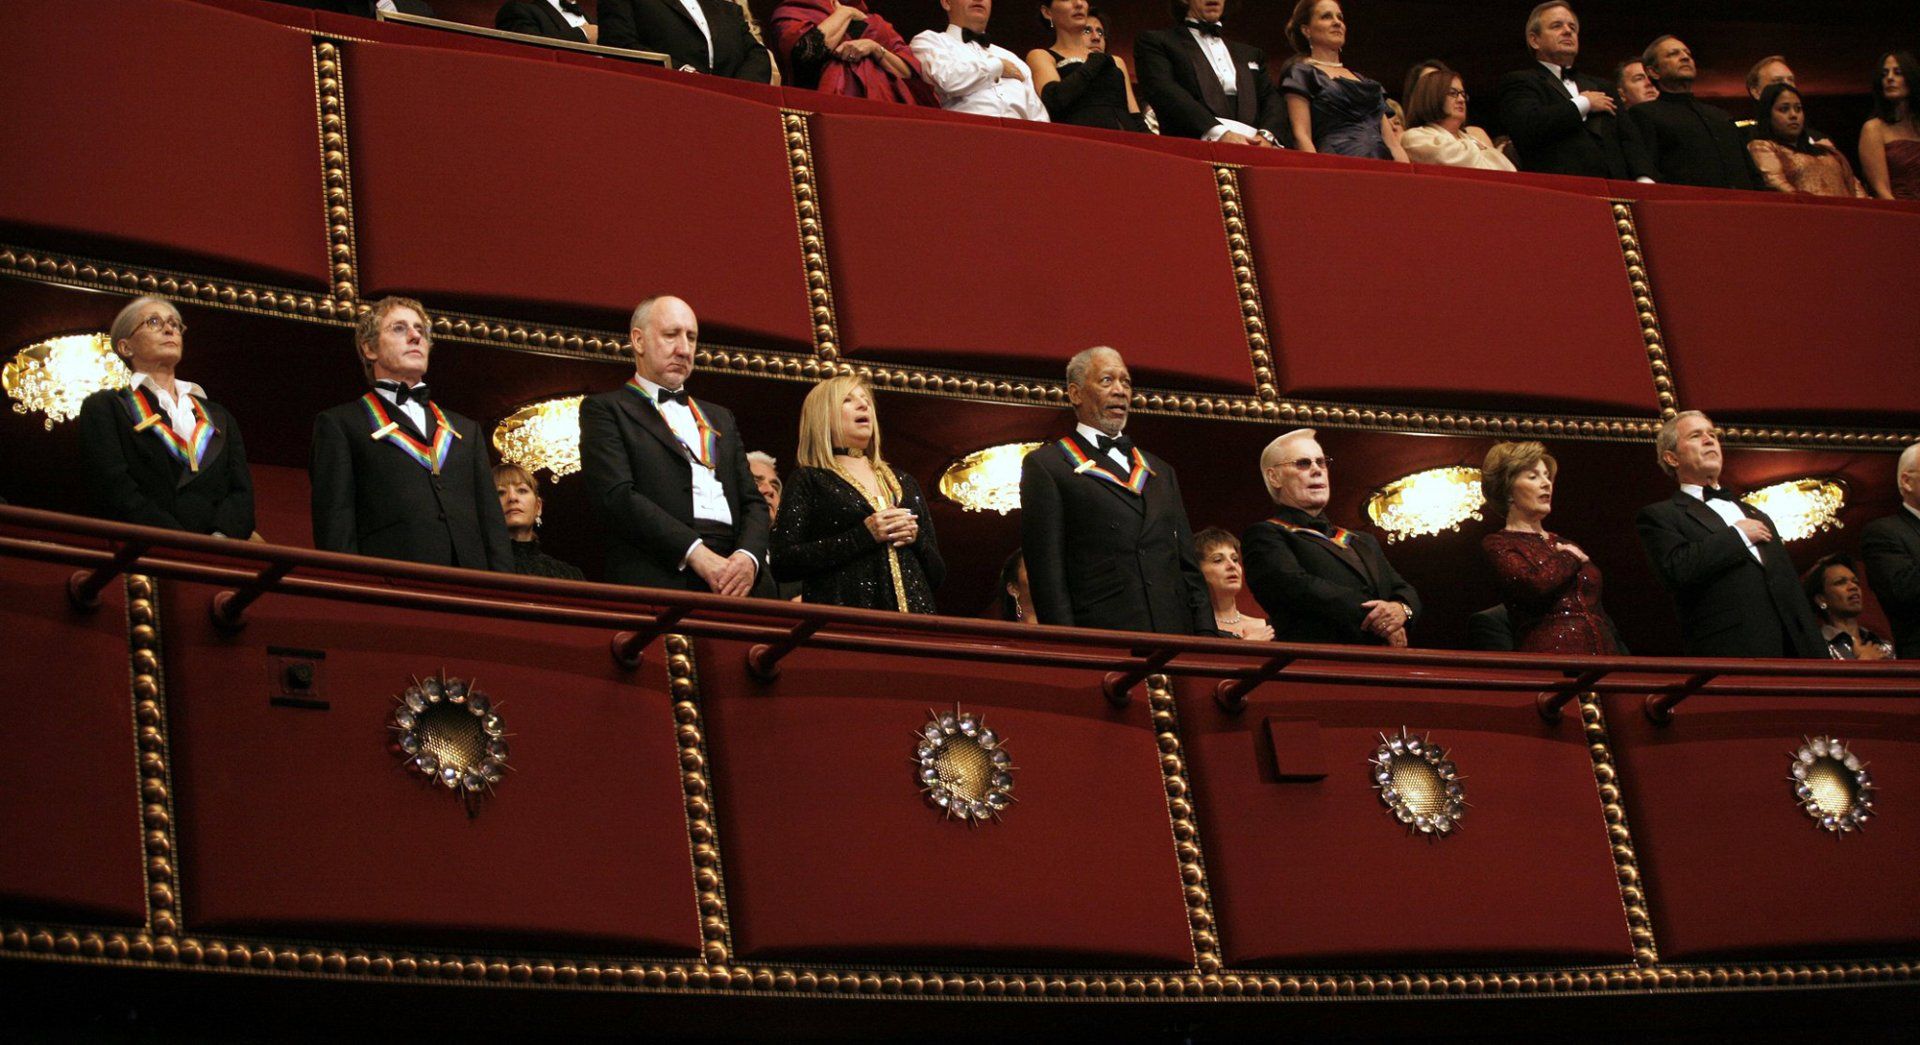 Kennedy Center 2008 honorees: Twyla Tharp, Roger Daltrey, Pete Townshend, Streisand, Morgan Freeman, George Jones, and Pres. Bush and Mrs. Bush.